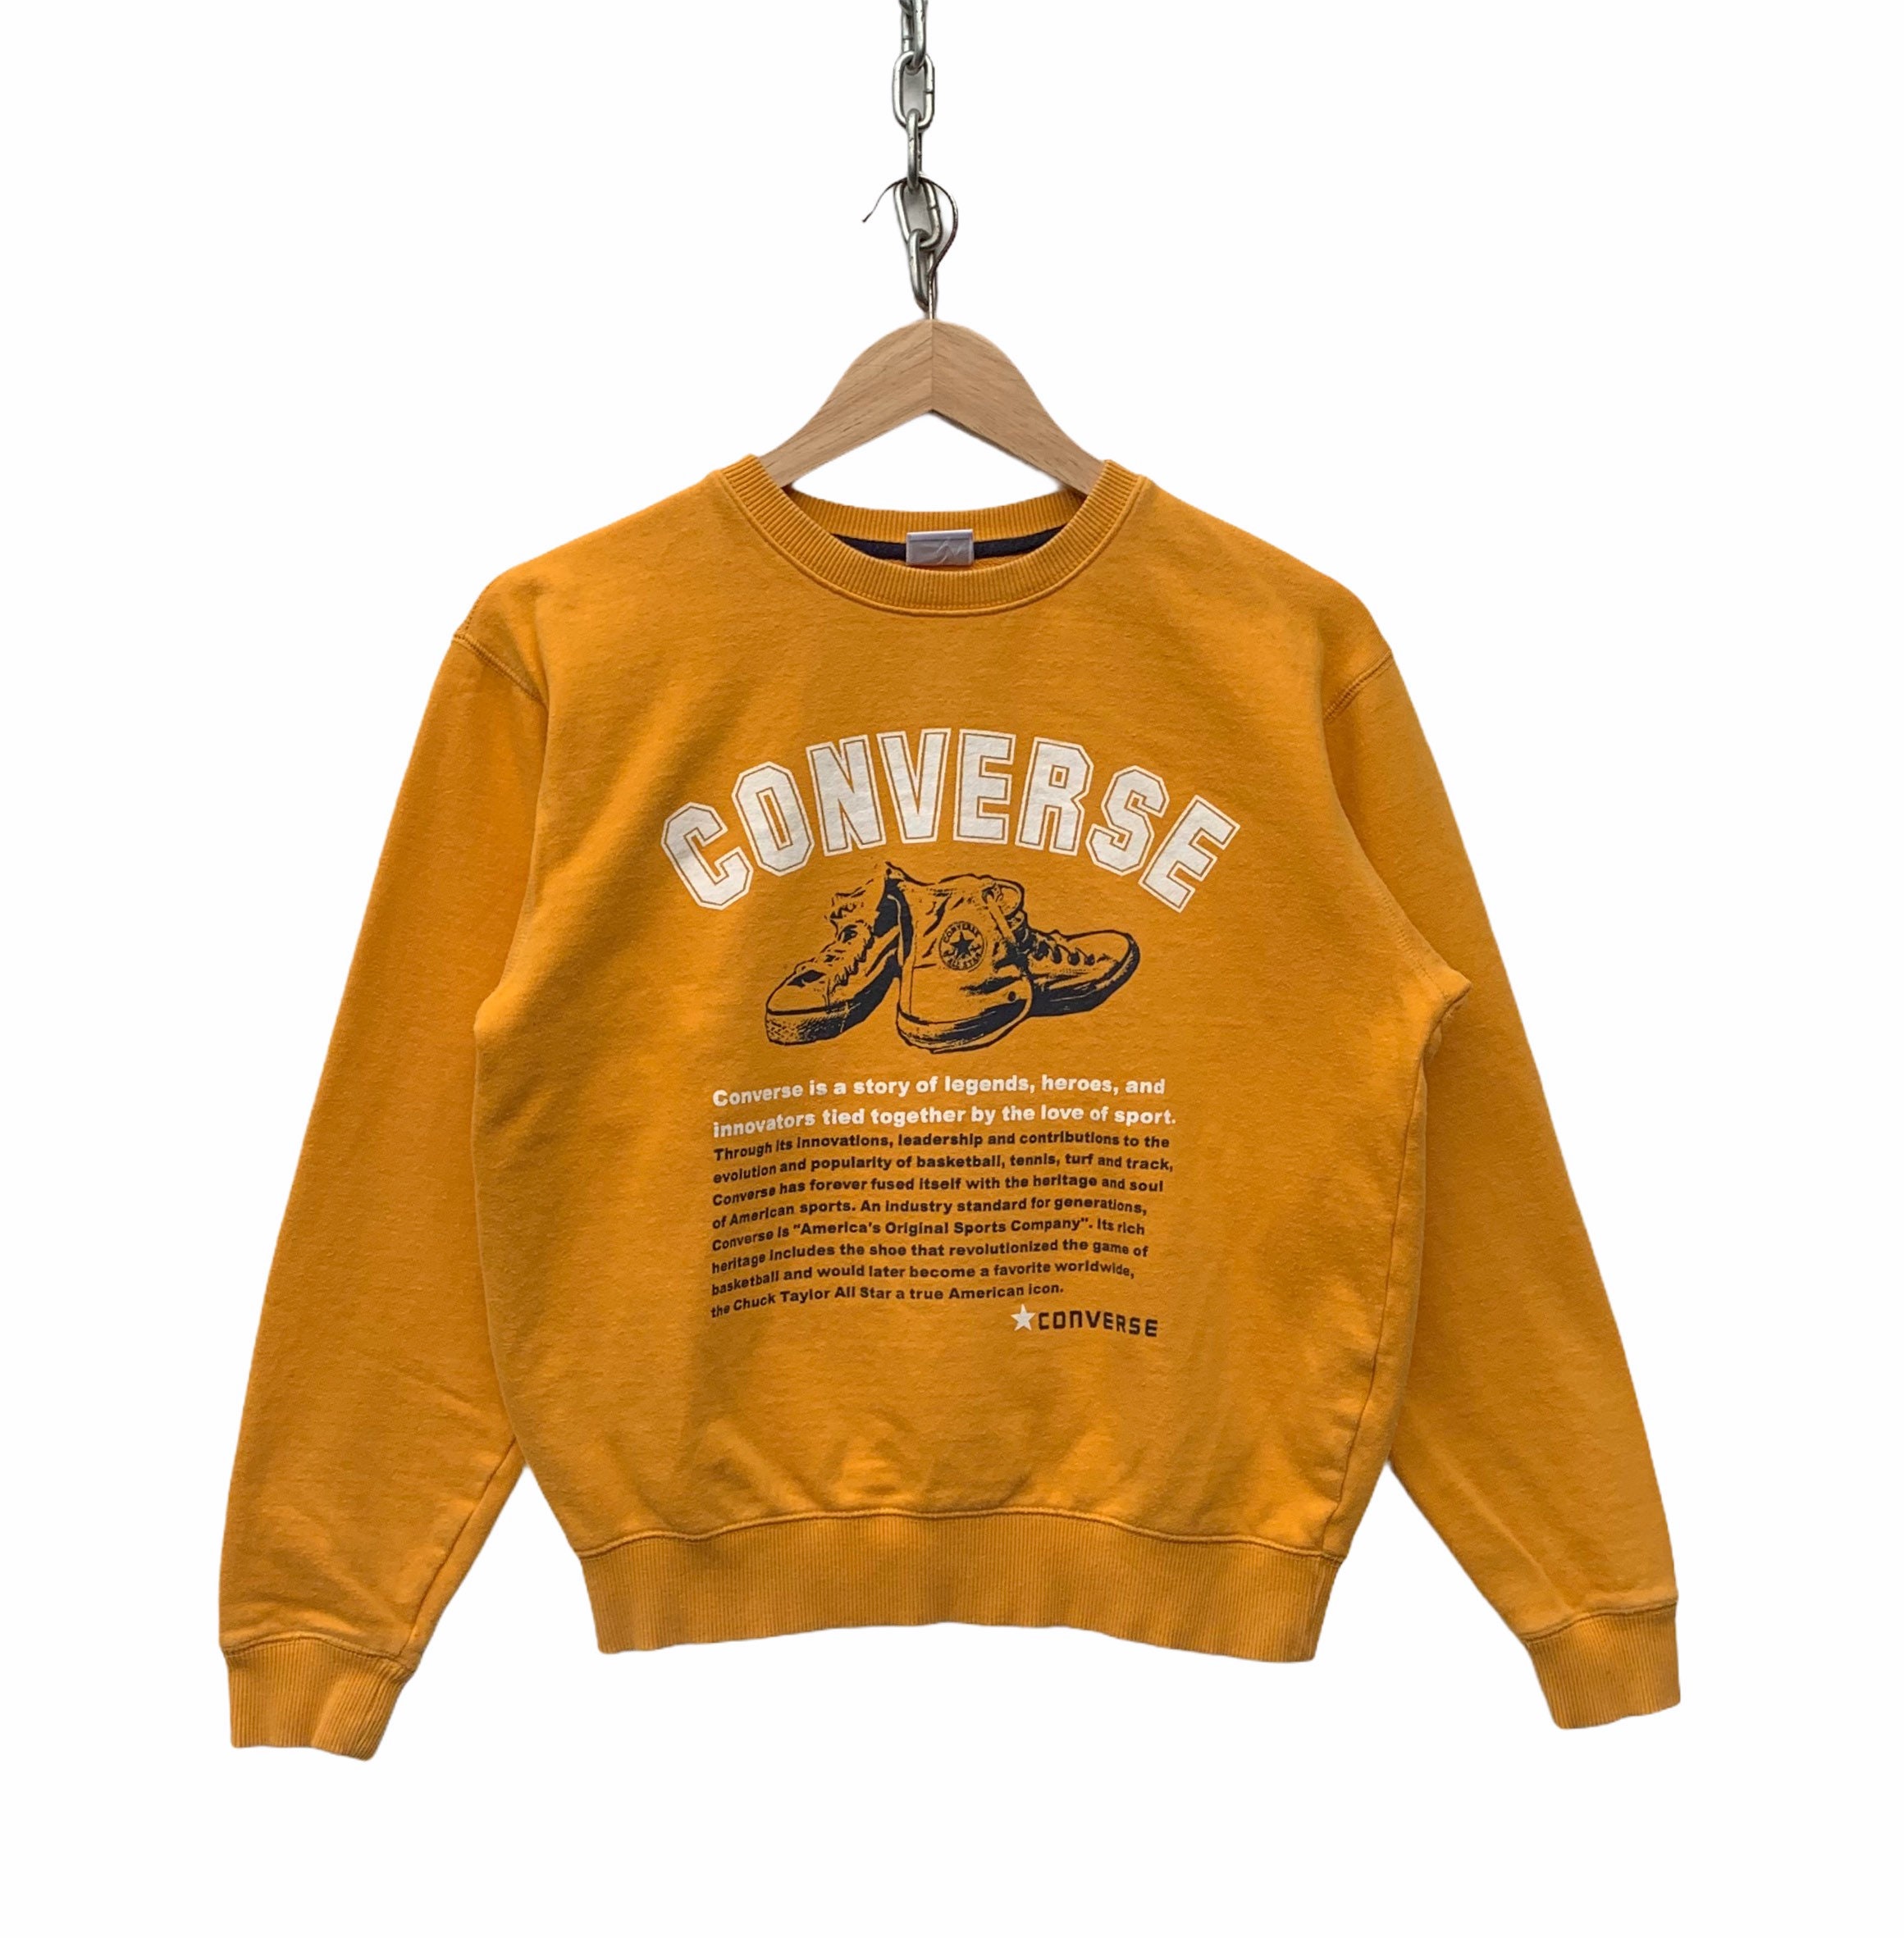 Converse Sweatshirt Vintage Converse All Star Sweater | Etsy